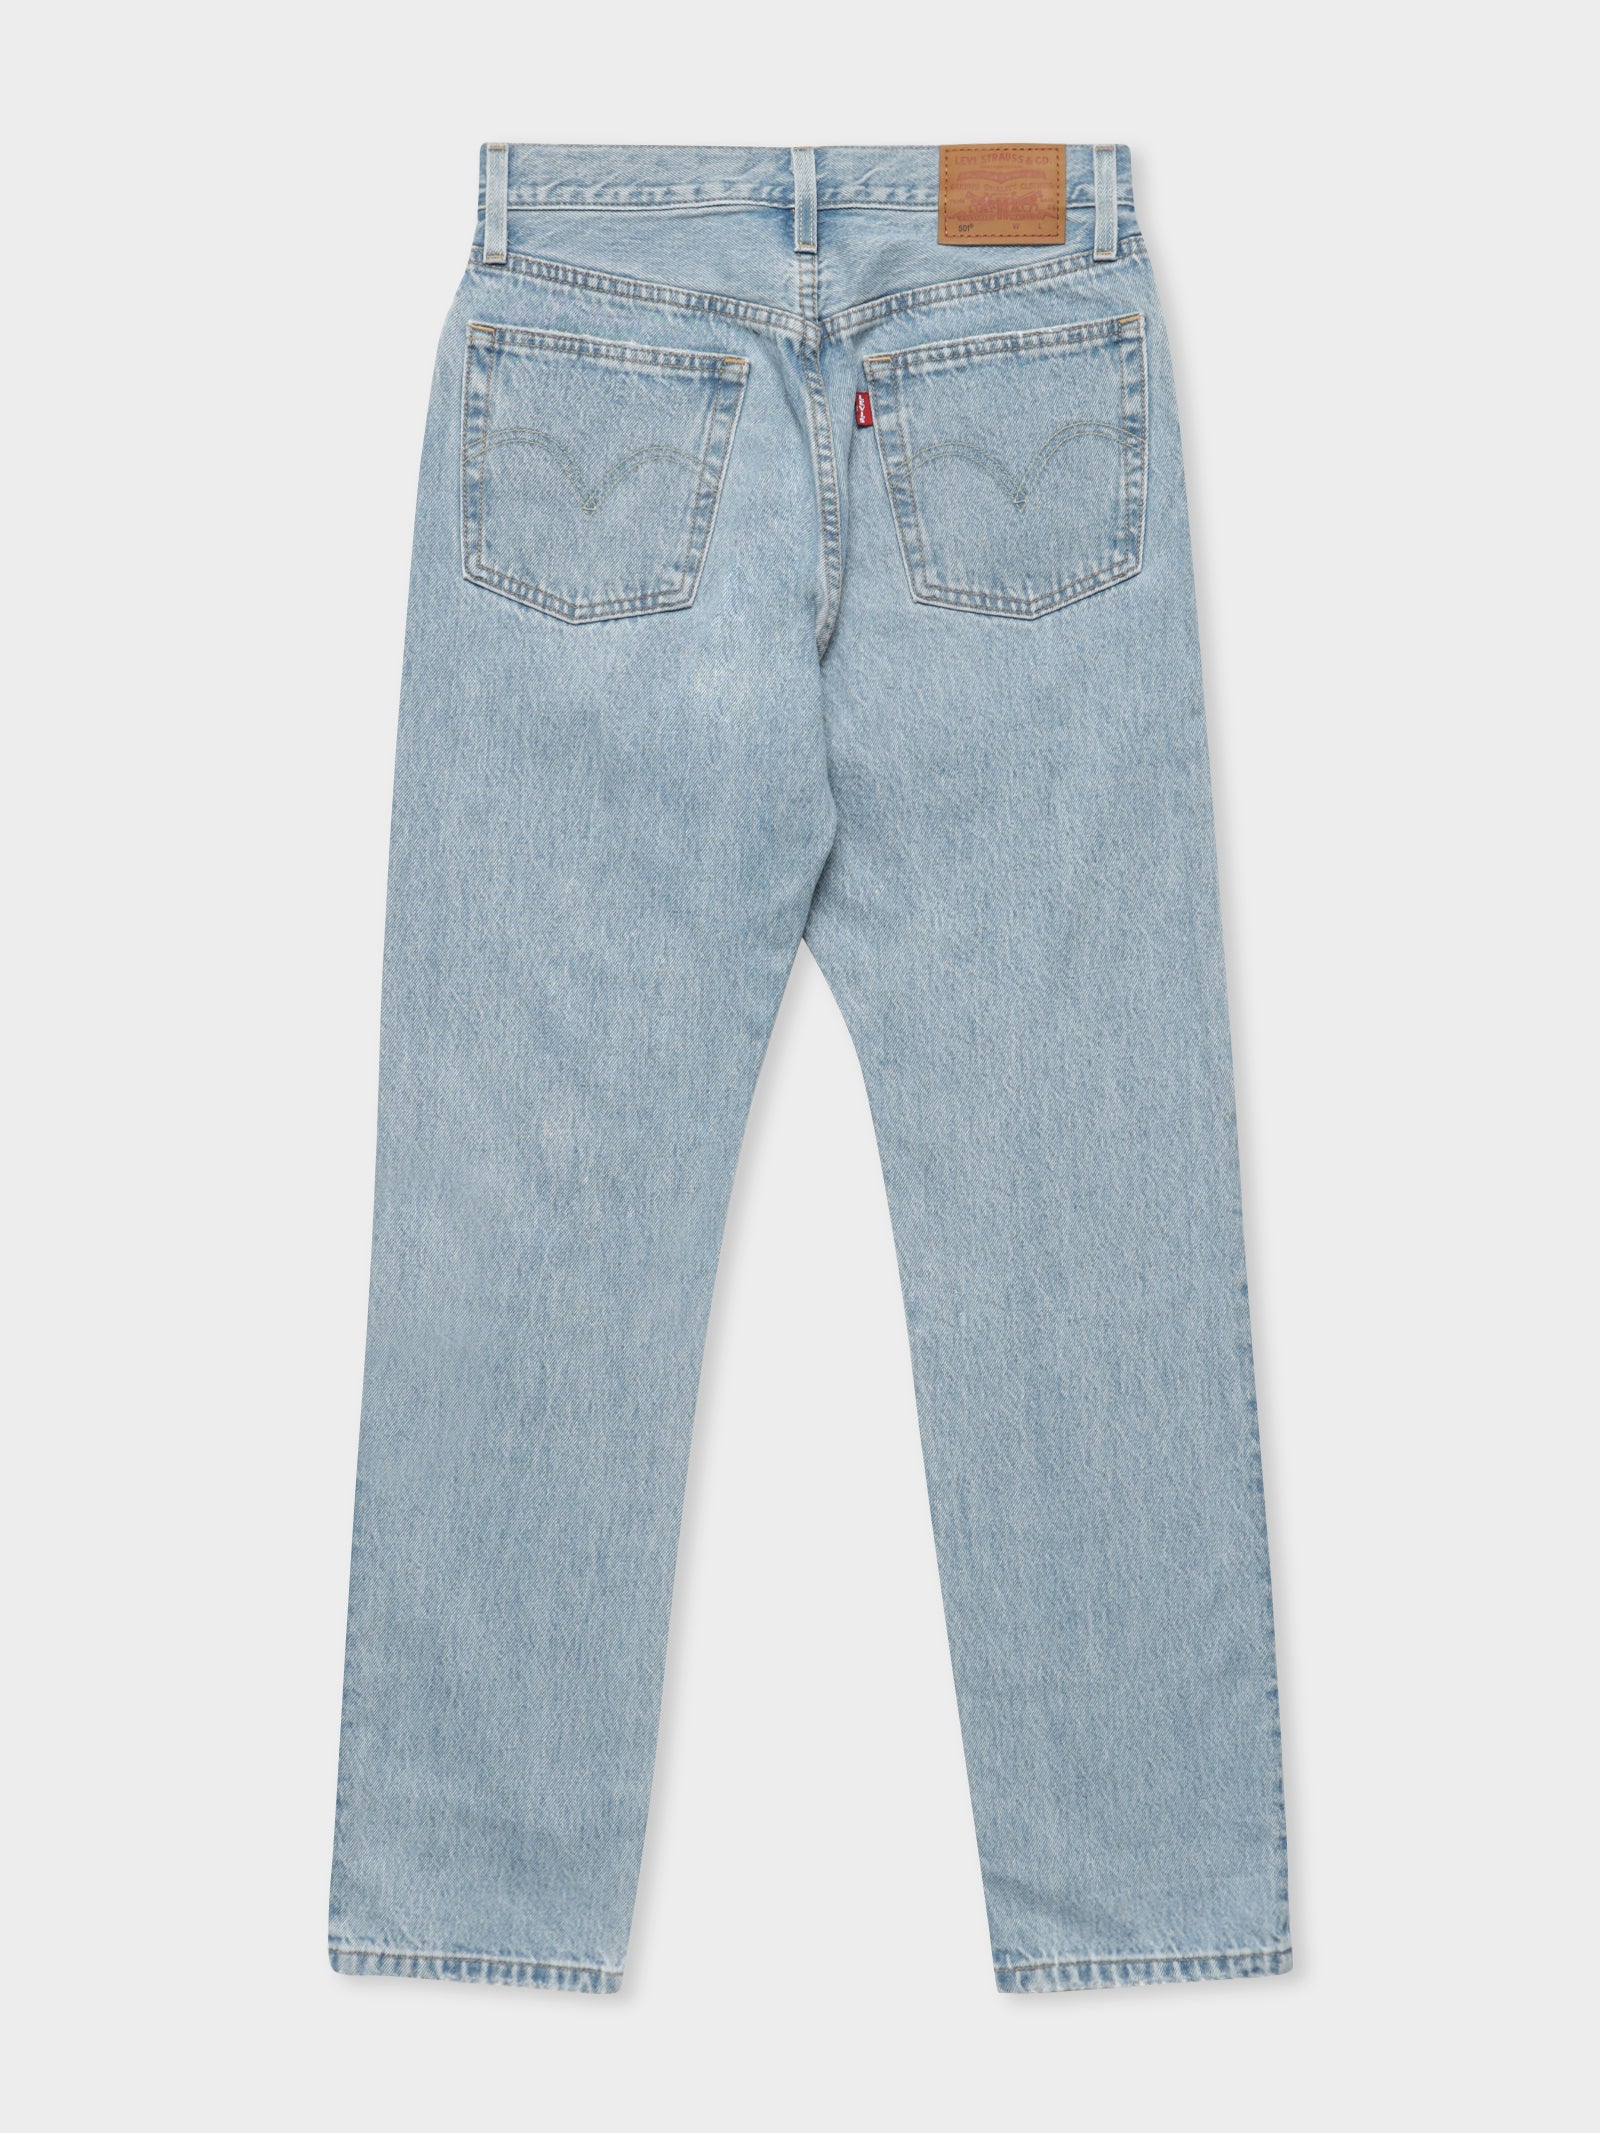 501 Original Straight Jeans in Luxor Last - Glue Store